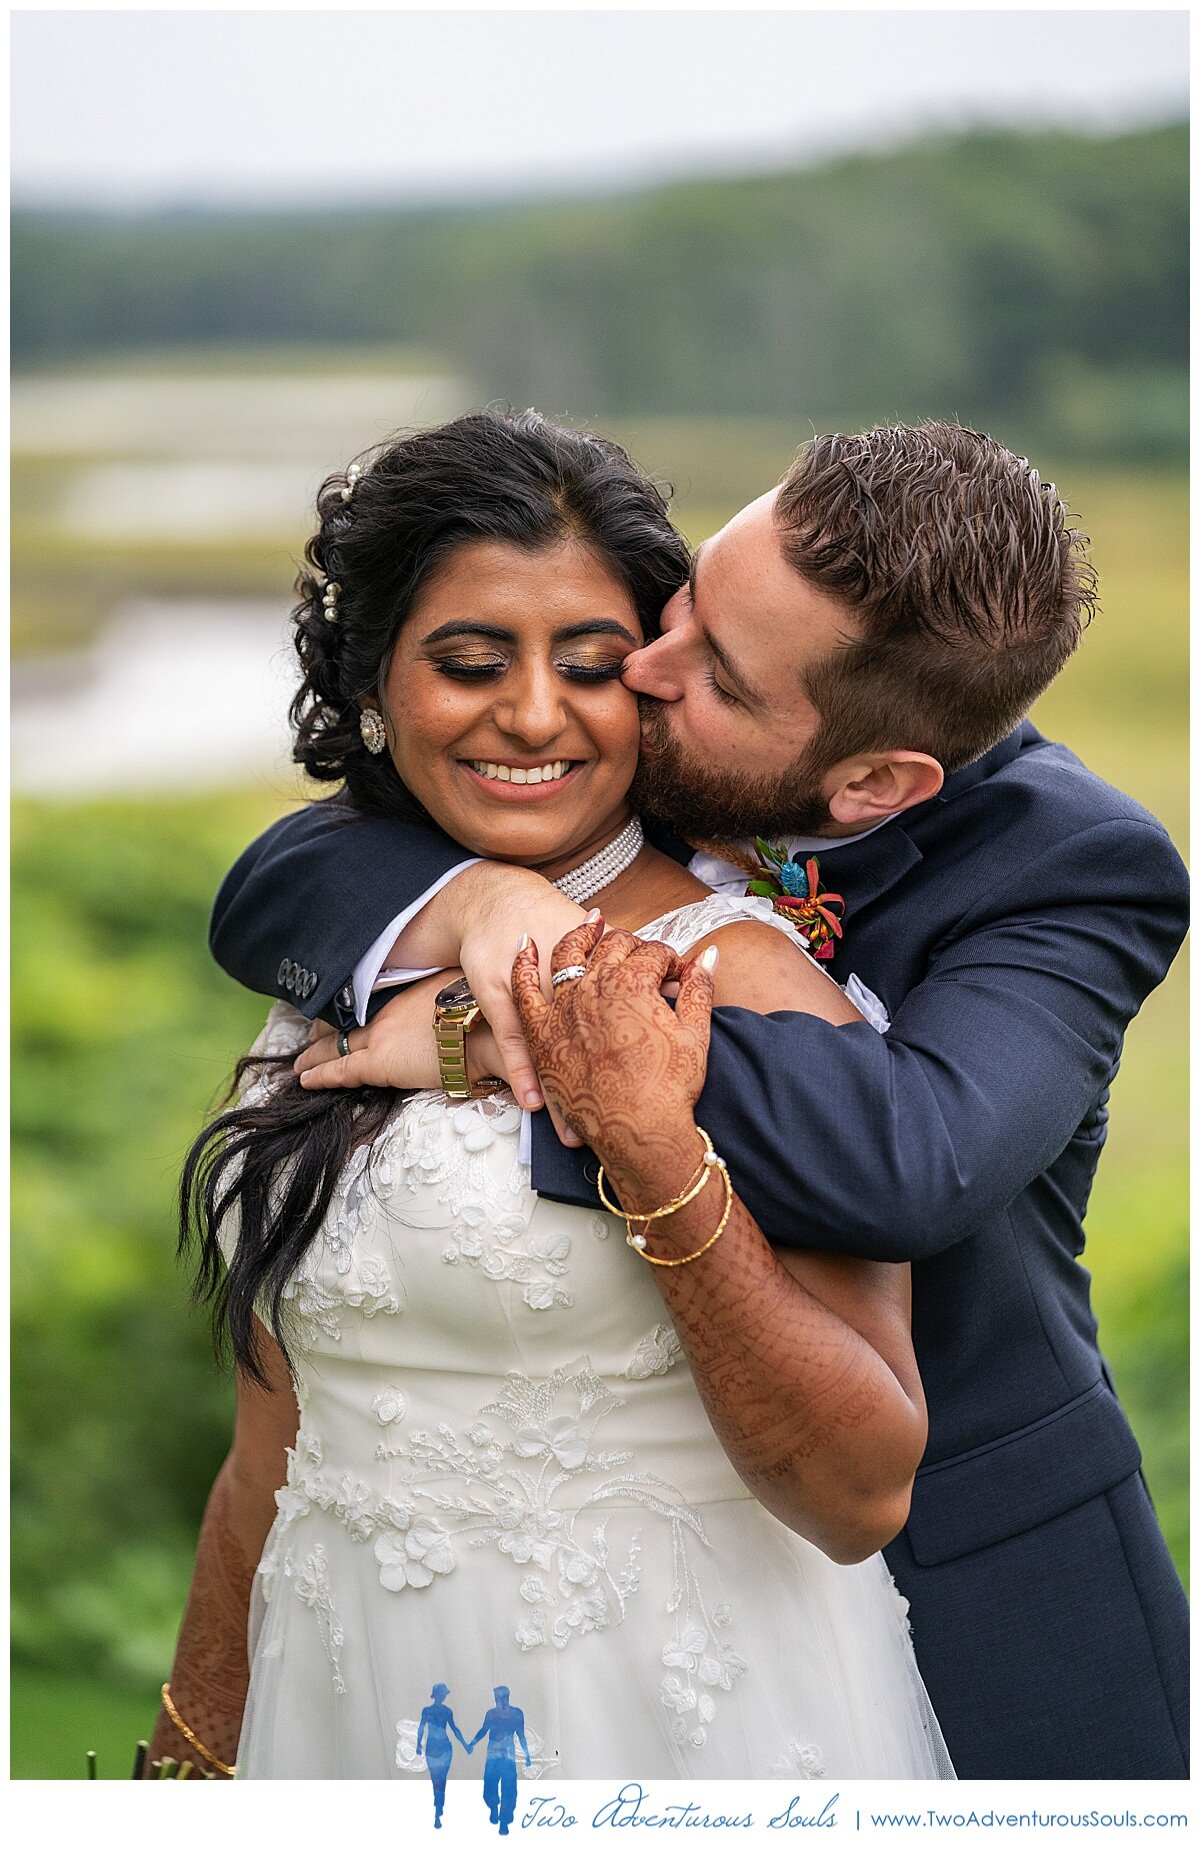 Scotland Fields Wedding, Maine Hindu Wedding Photographers, Two Adventurous Souls - 090521_0133.jpg